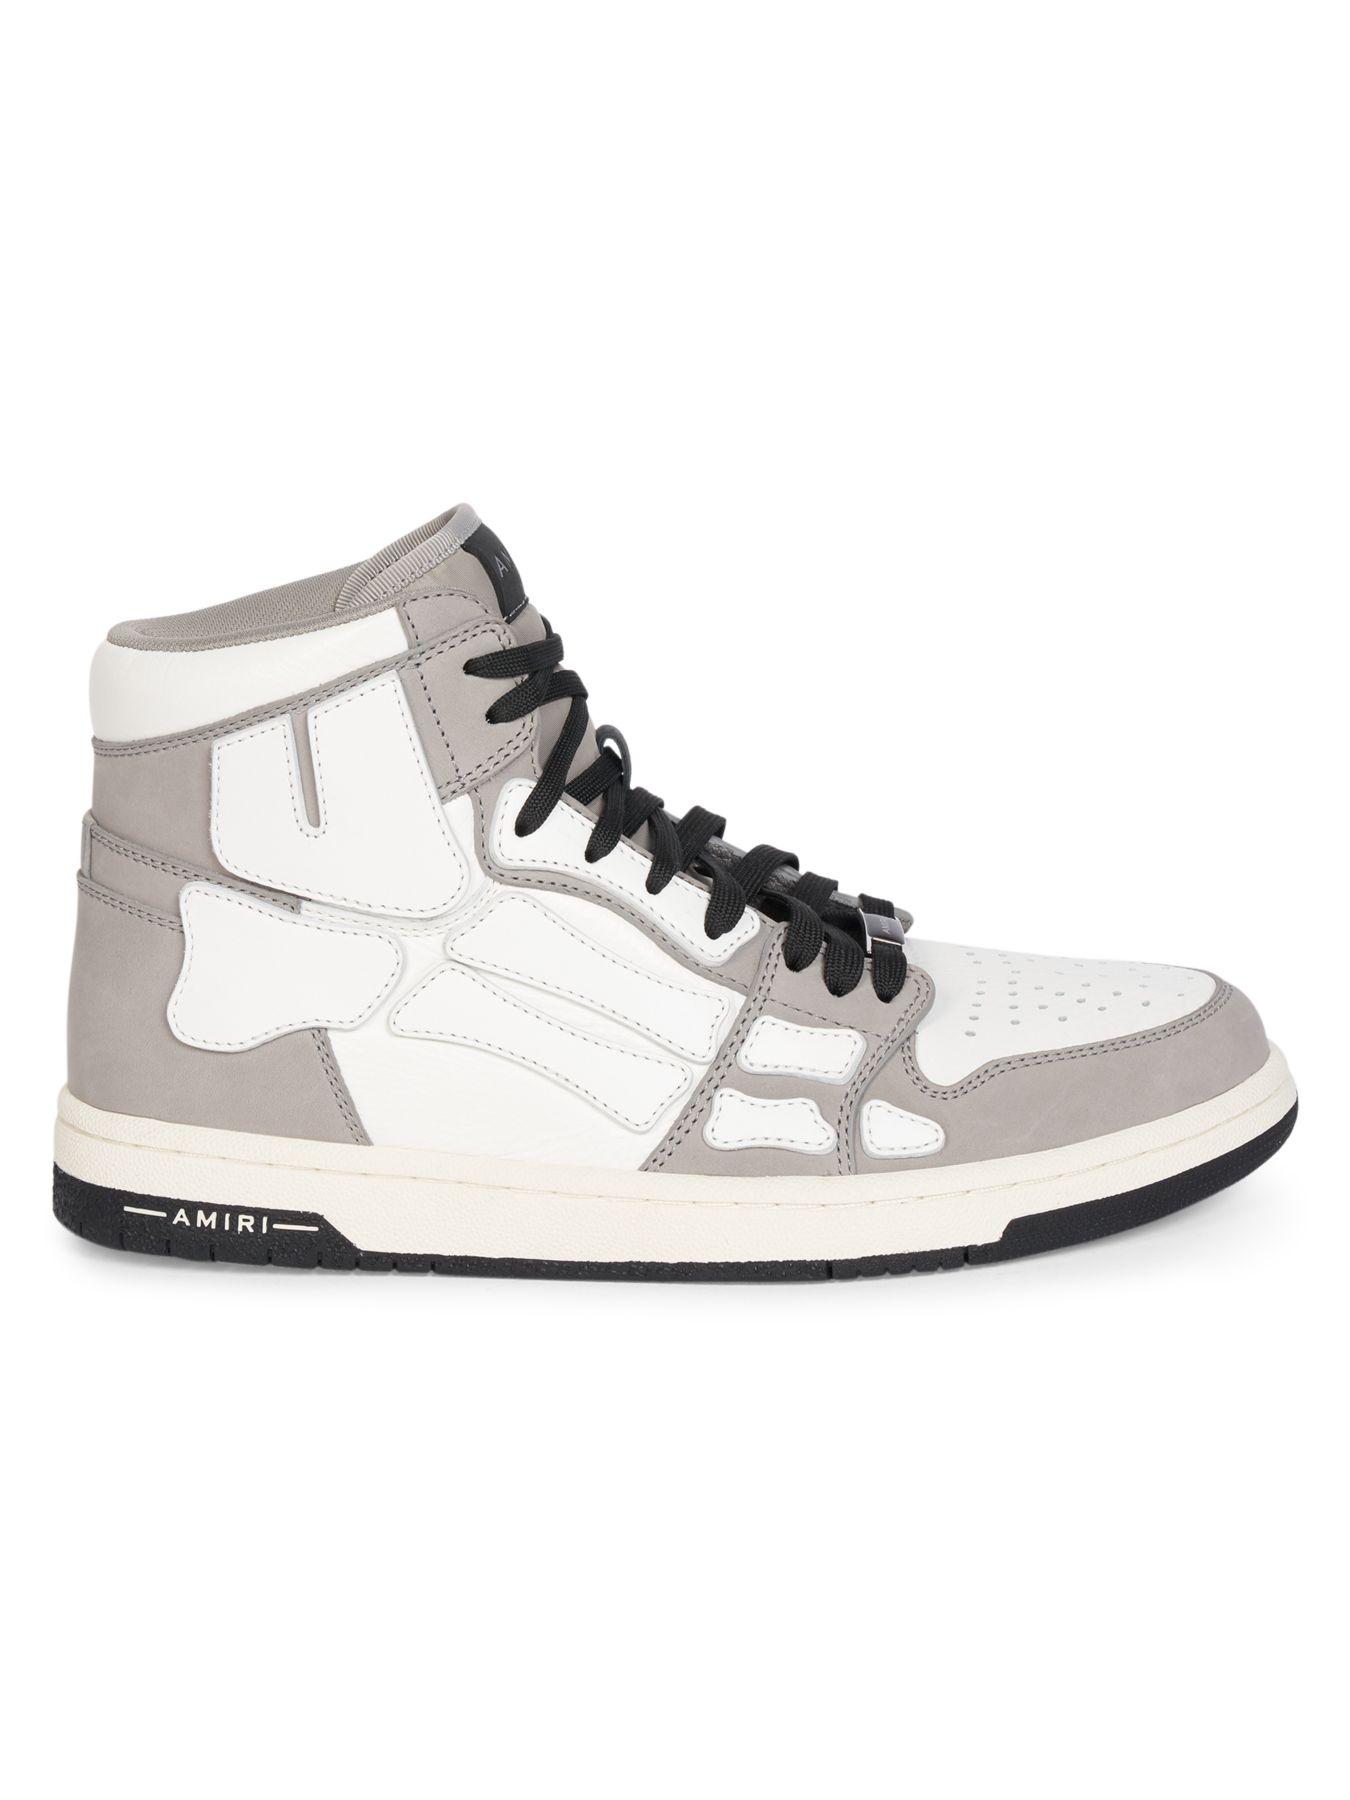 Amiri Skeleton High-top Leather Sneakers in Grey White (White) for Men ...